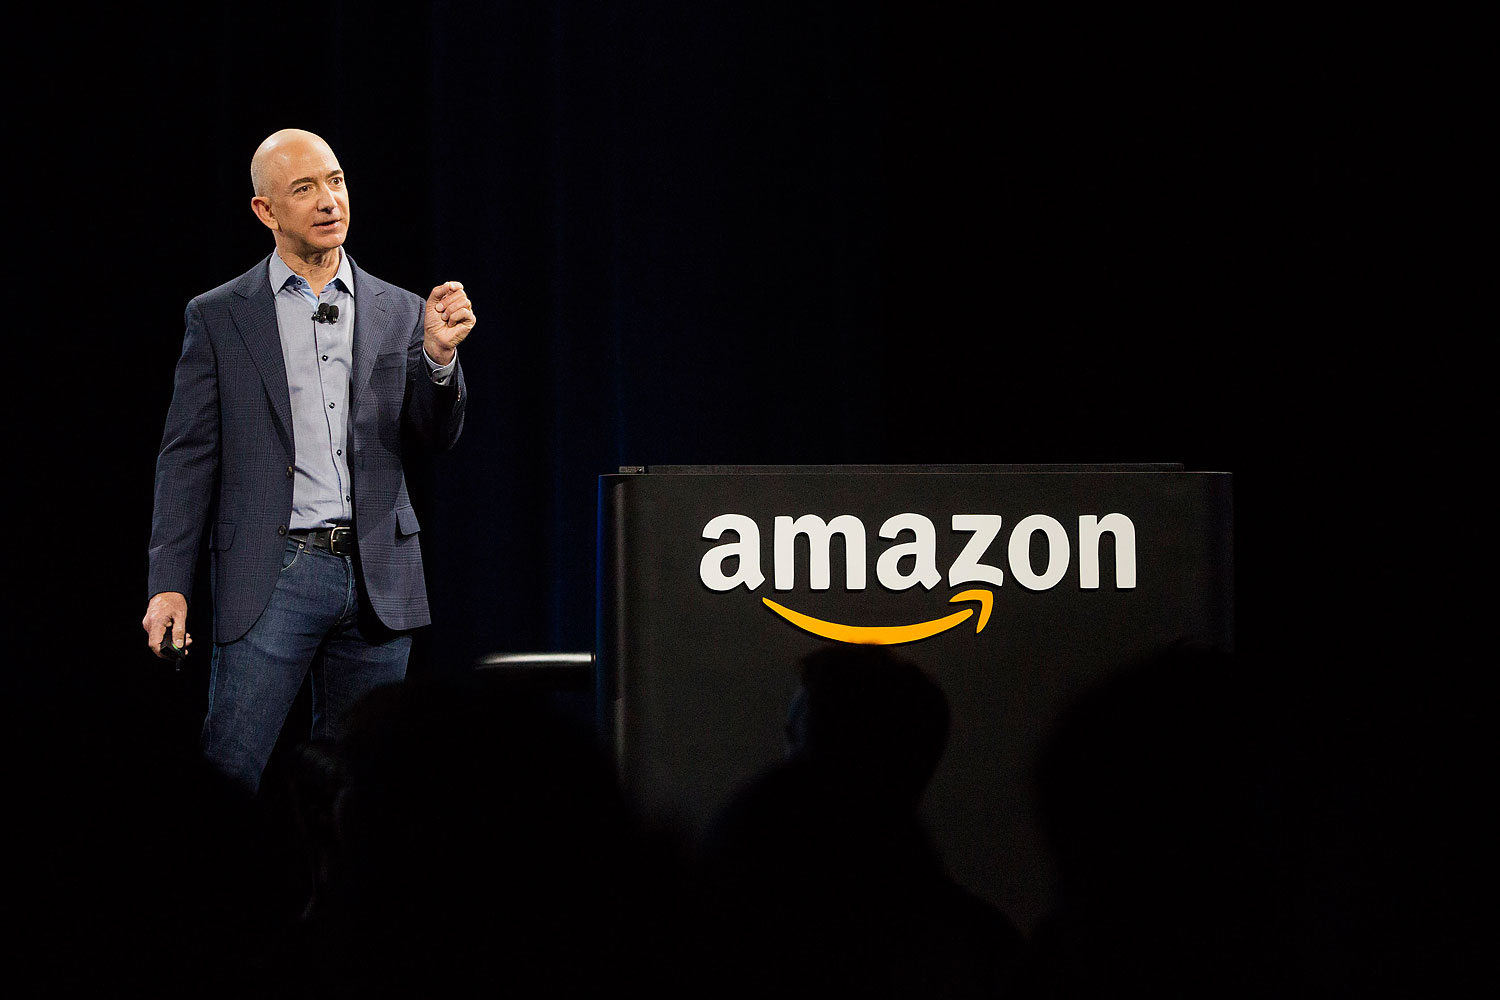 Amazon CEO Bezos Introduces Smartphone to Take on Apple, Samsung